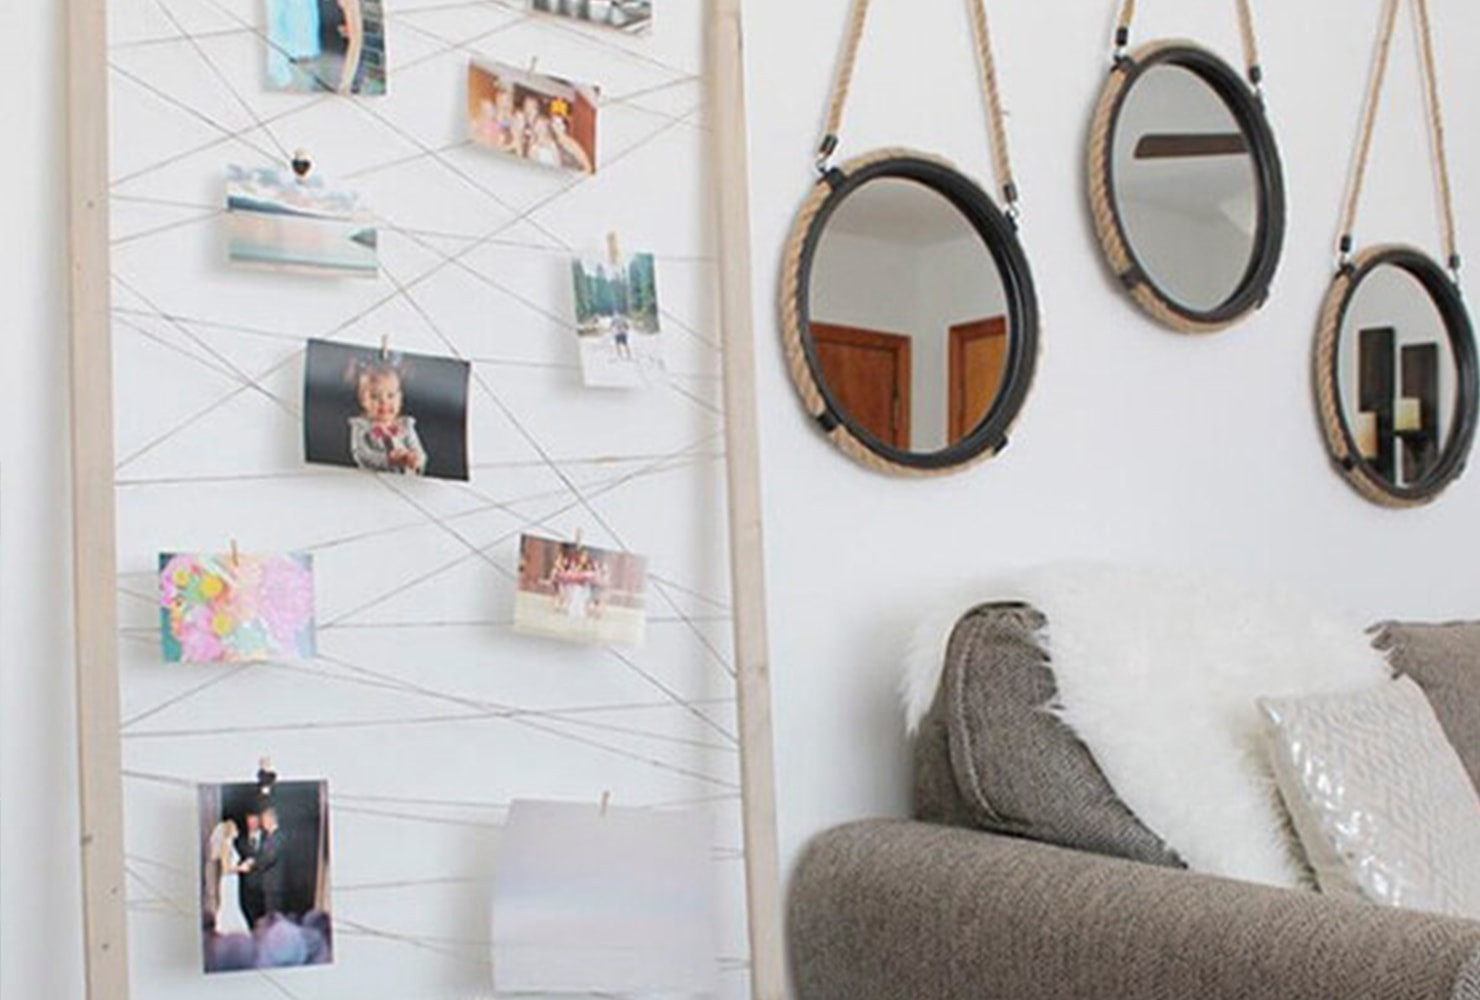 DIY Dorm Decorations
 37 Creative DIY Dorm Decor Ideas to Liven Up Your Space